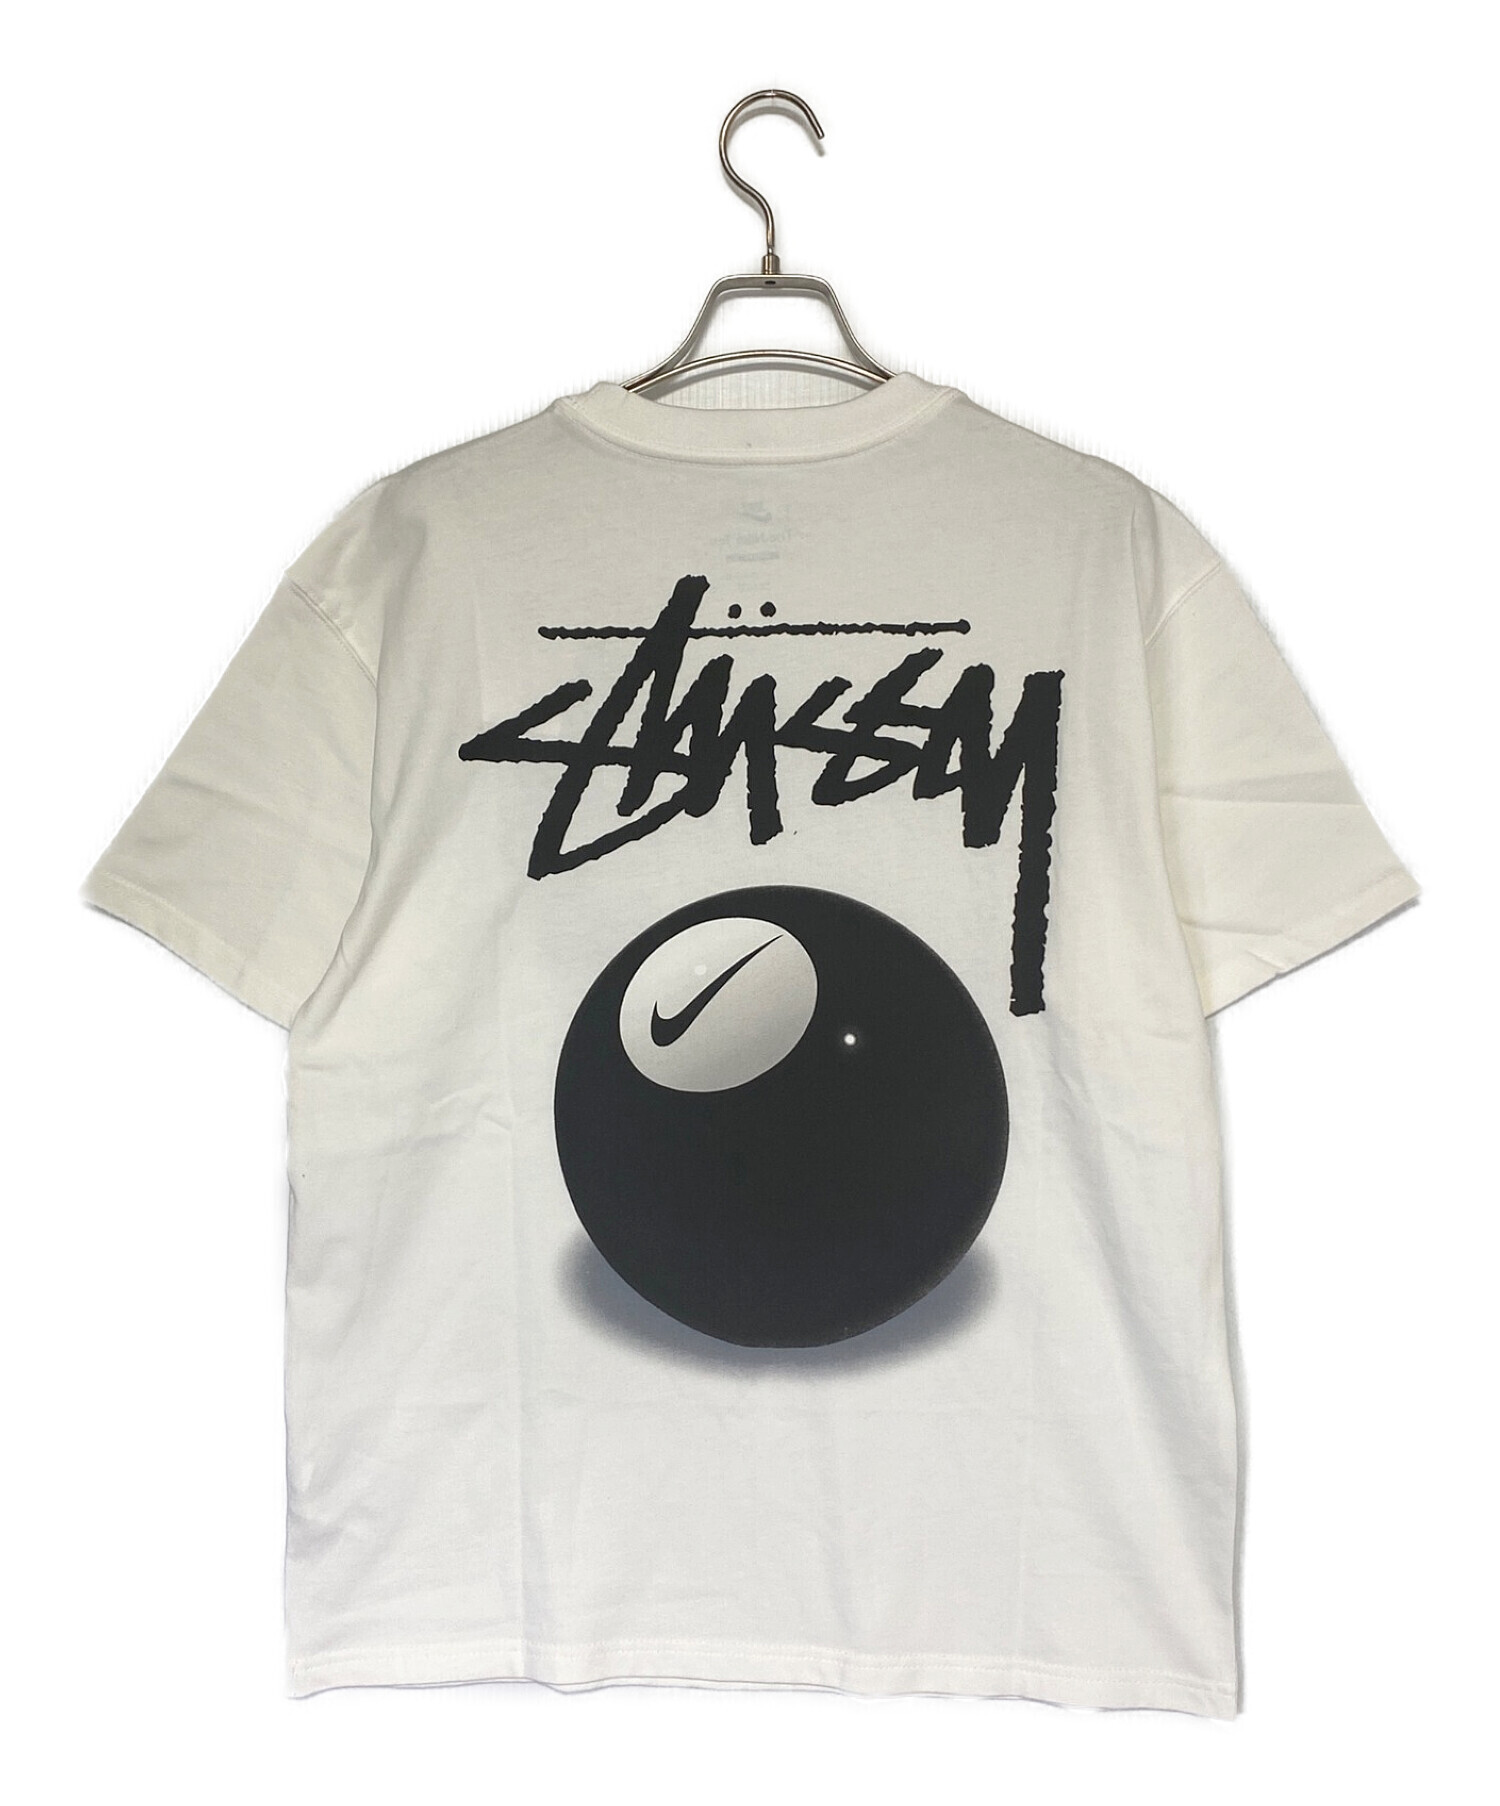 NIKE (ナイキ) stussy (ステューシー) SS 8 Ball T-Shirt ホワイト サイズ:SIZE M